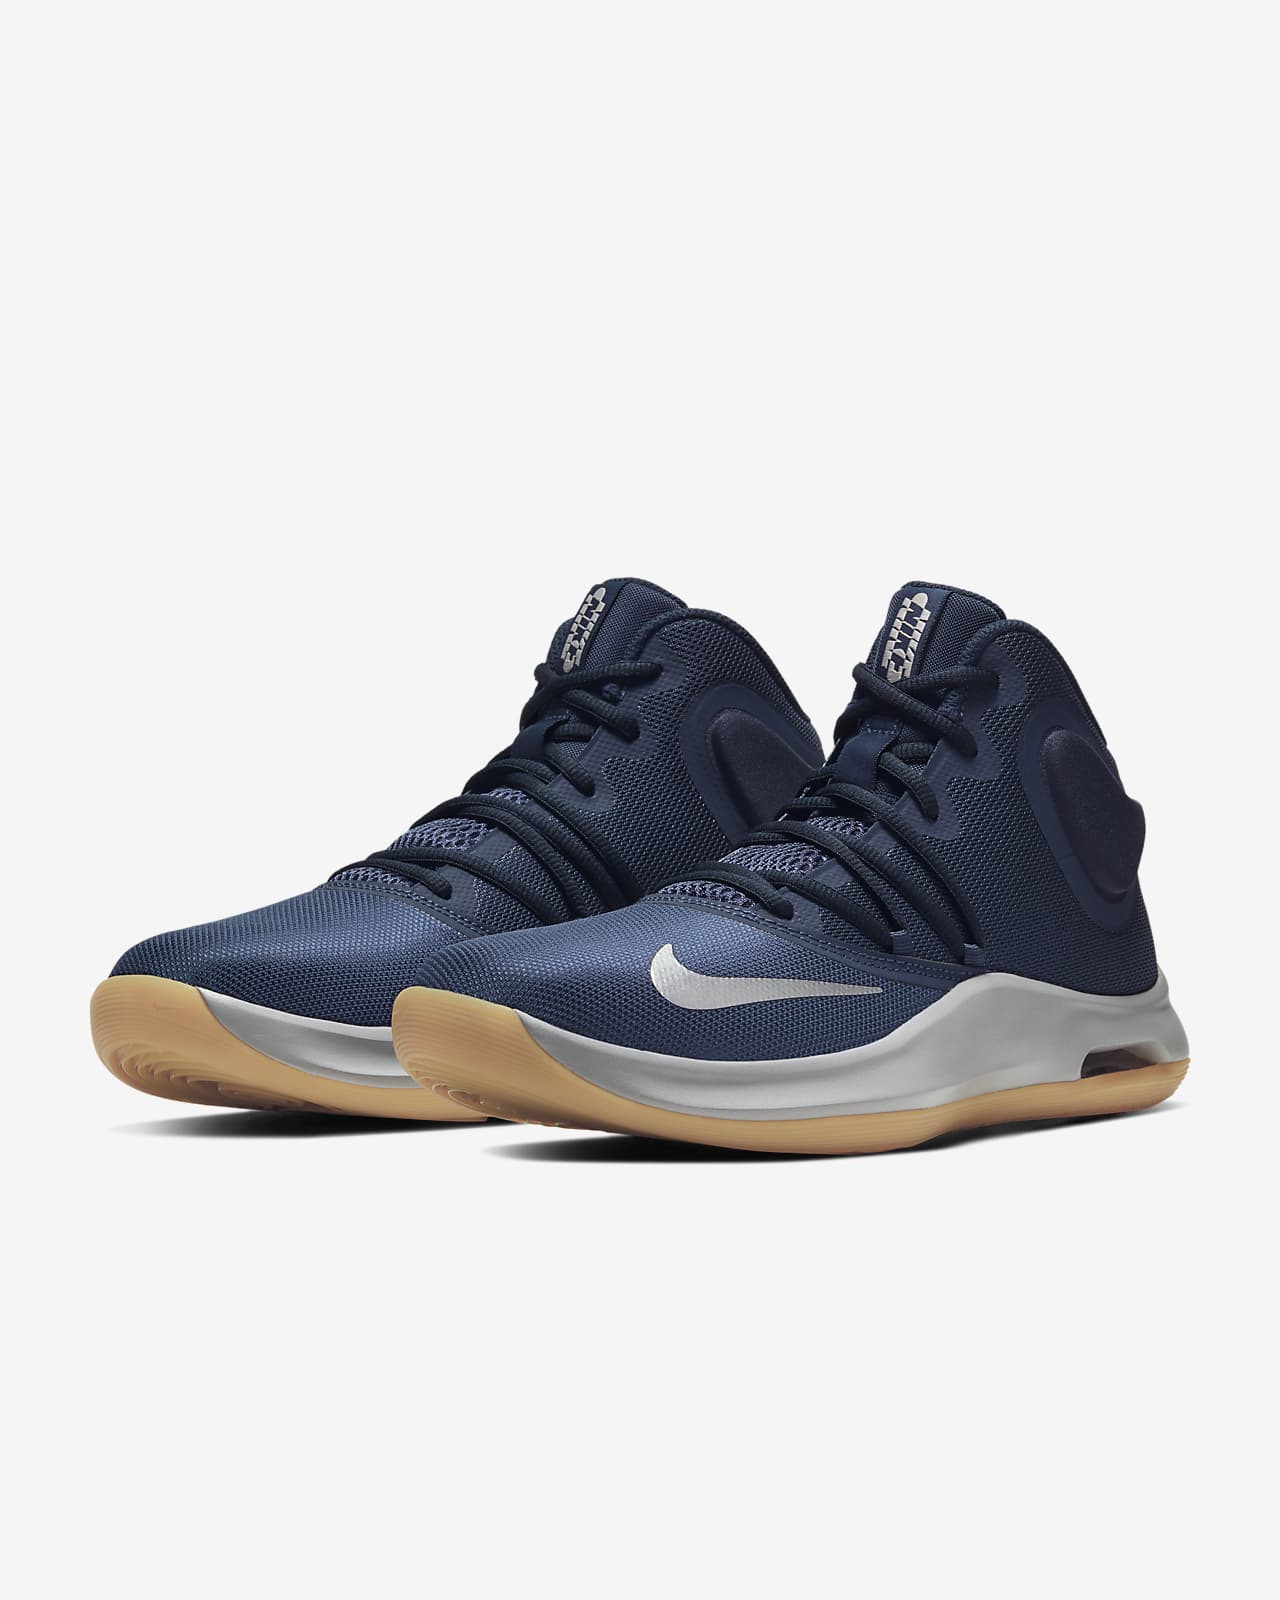 Nike Air Versitile IV Basketball Shoe 